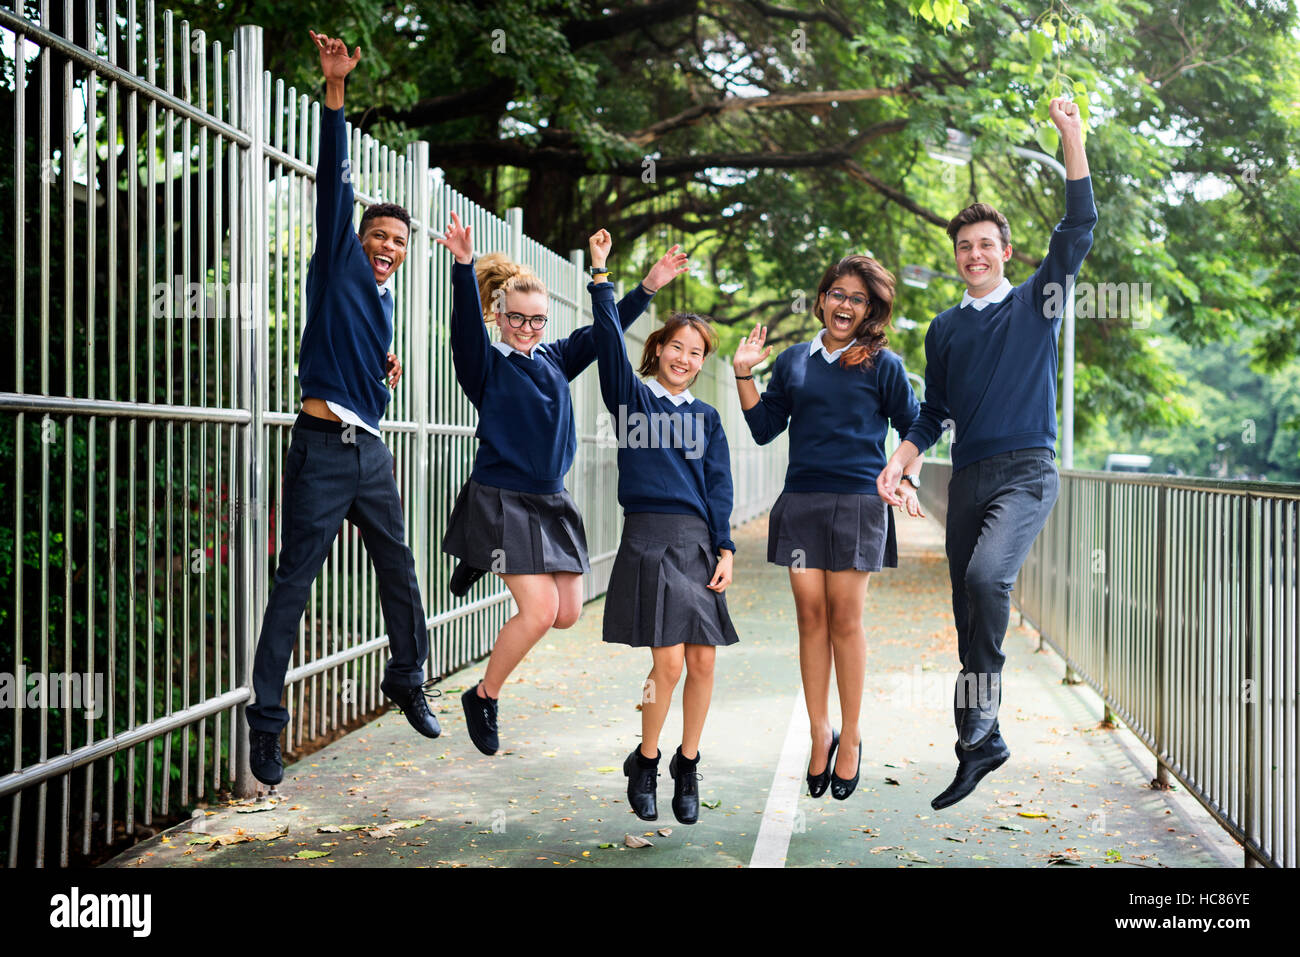 Jumping Enjoyment Friend Diverse Uniform Concept Stock Photo - Alamy